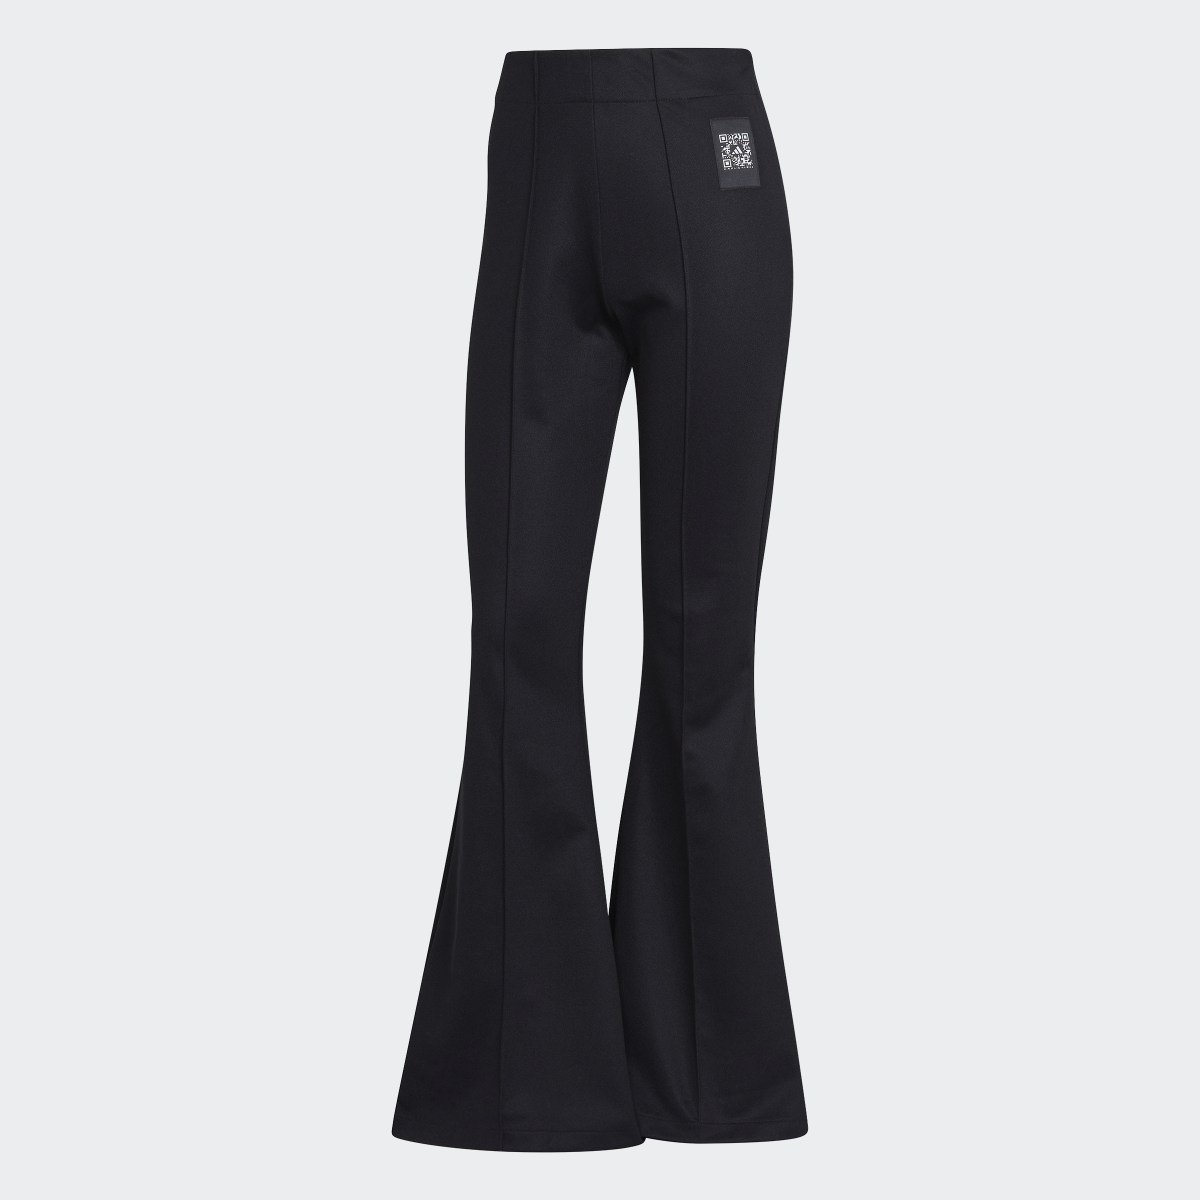 Adidas x Karlie Kloss Flared Pants. 4